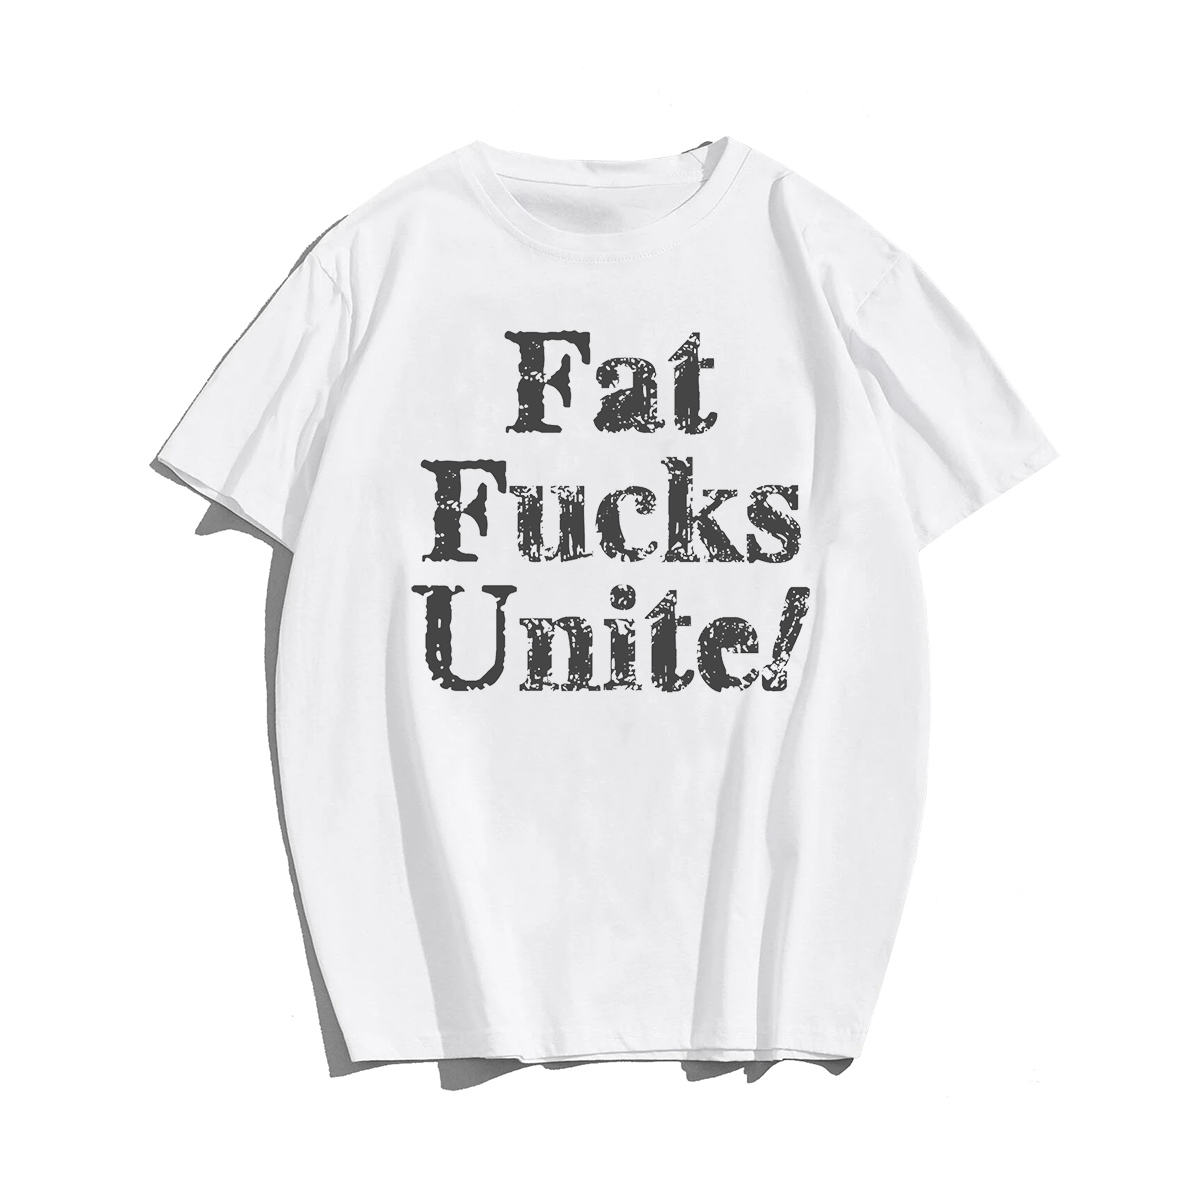 Fat Fucks Unite! T-shirt for Men, Oversize Plus Size Man Clothing - Big Tall Men Must Have